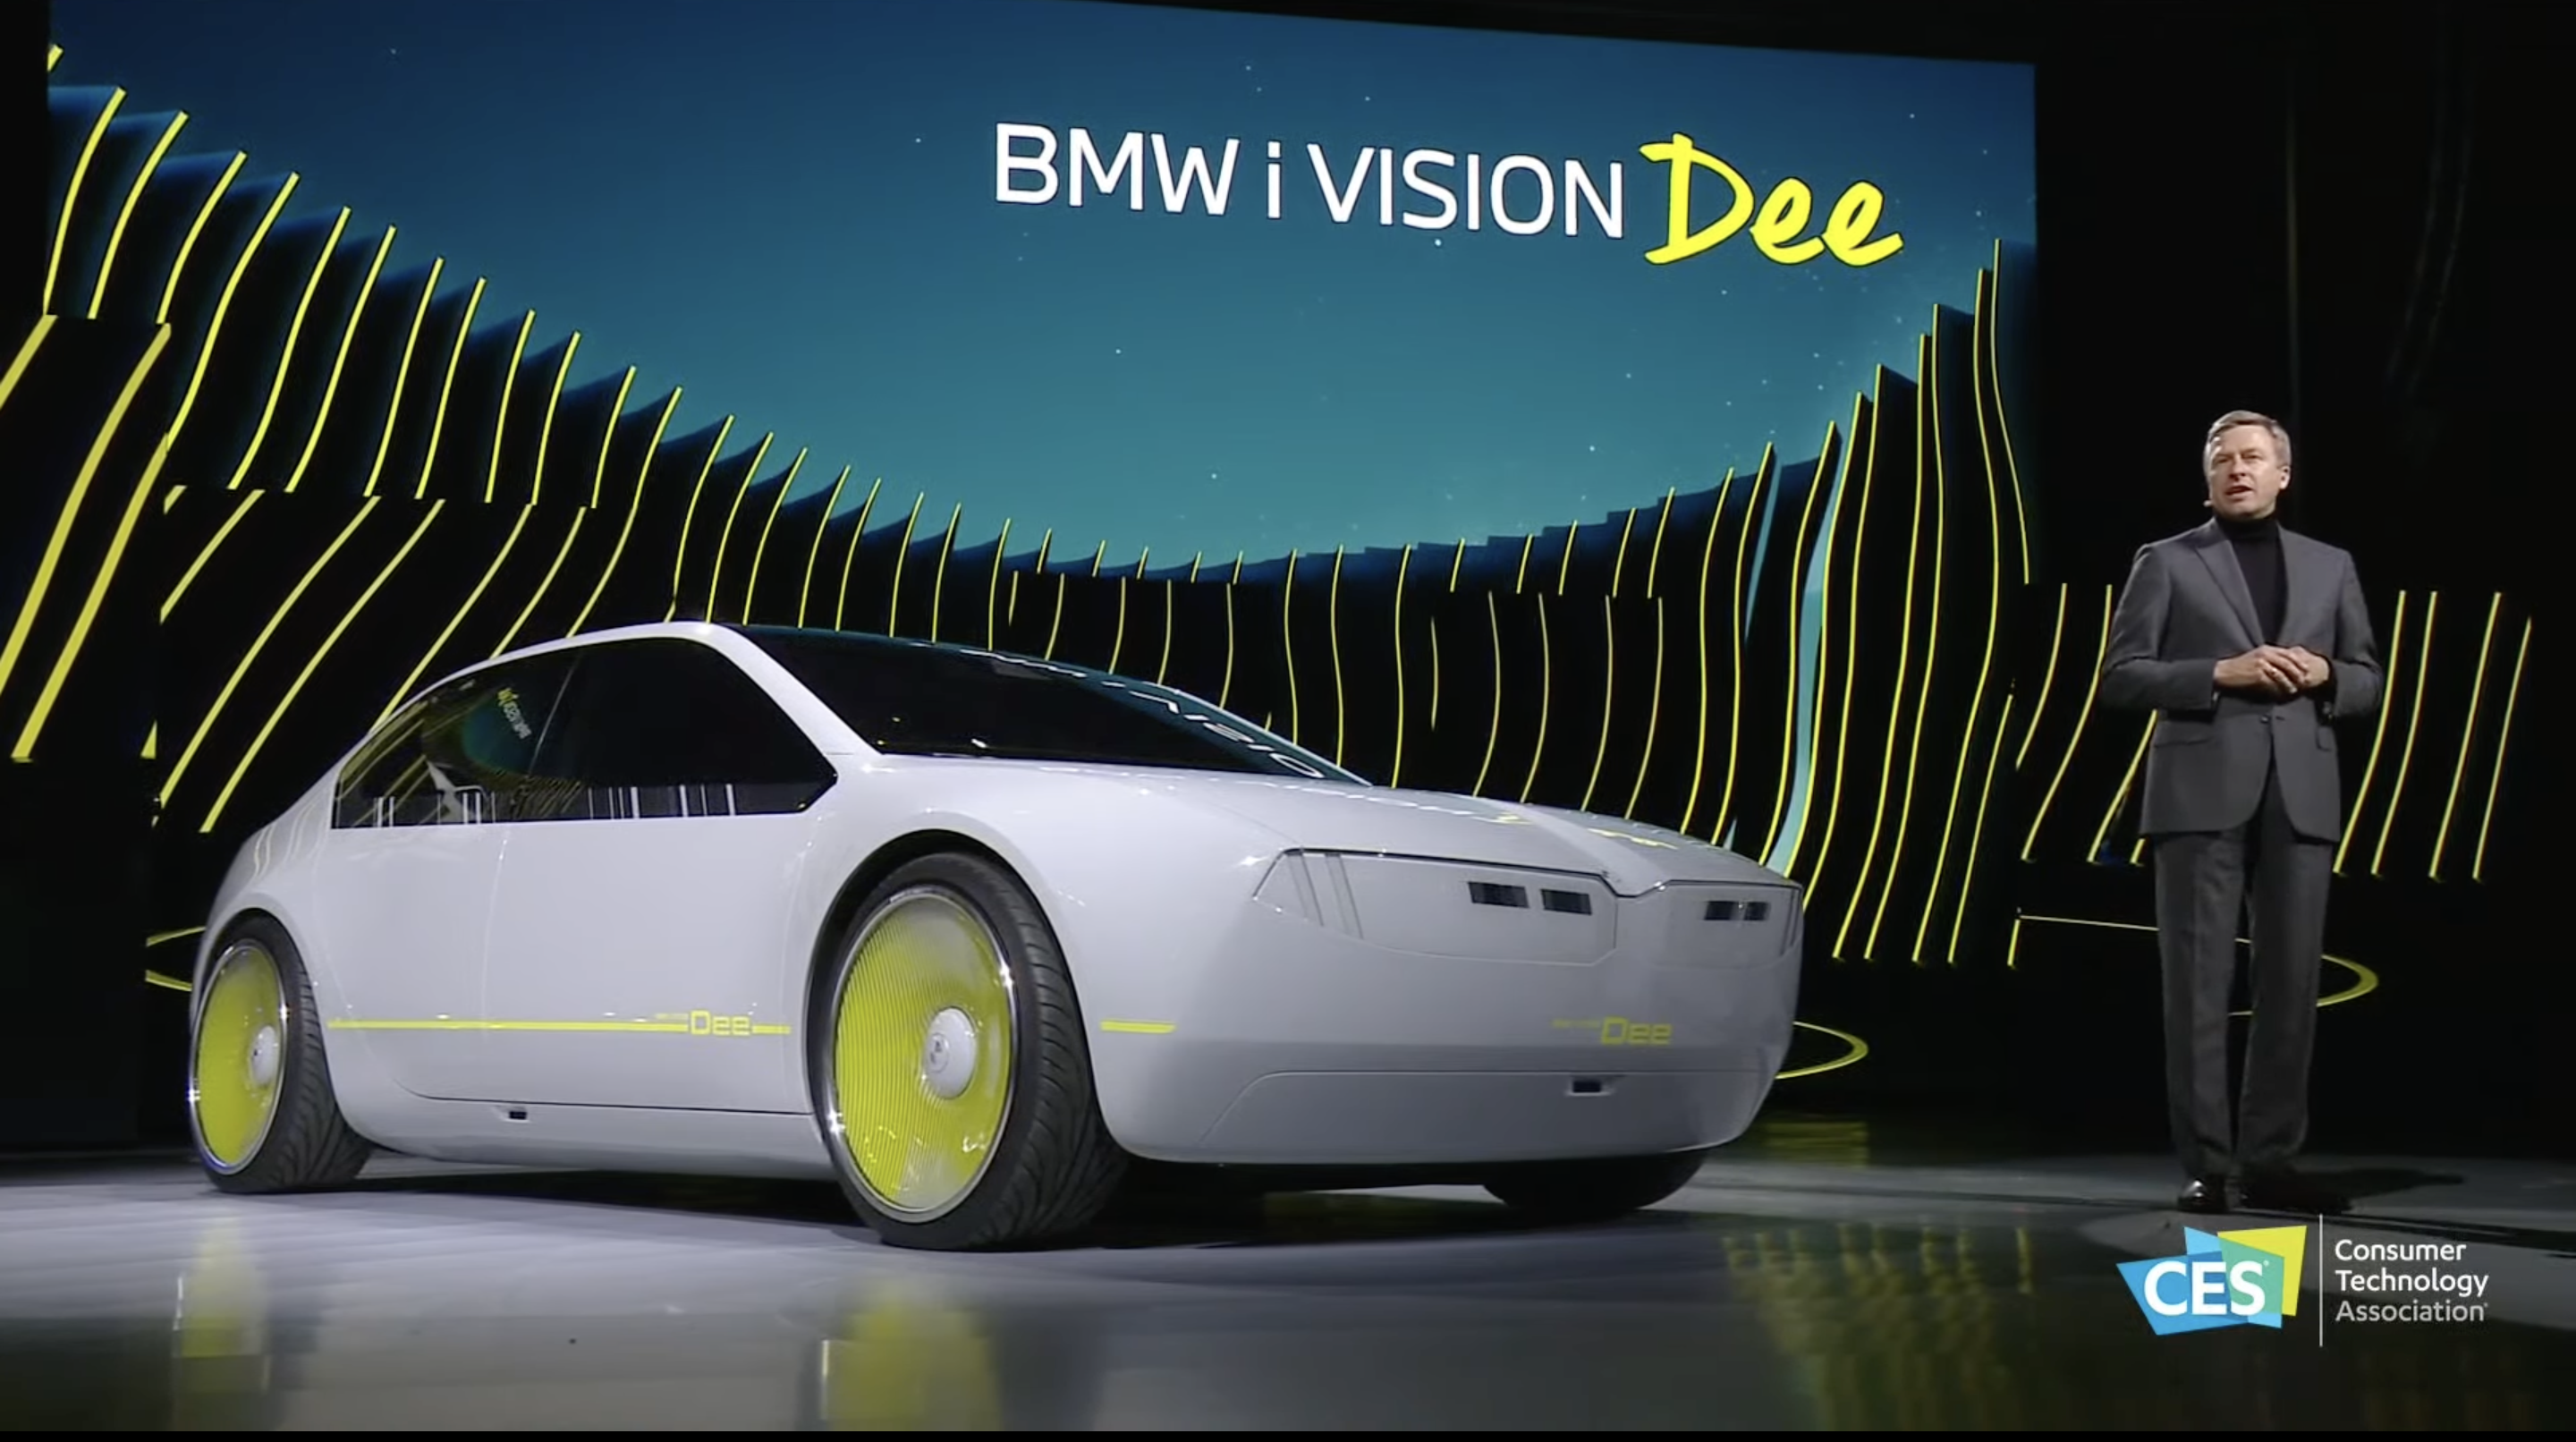 BMW unveils Dee prototype, 'the next level of human-machine interaction' |  TechCrunch